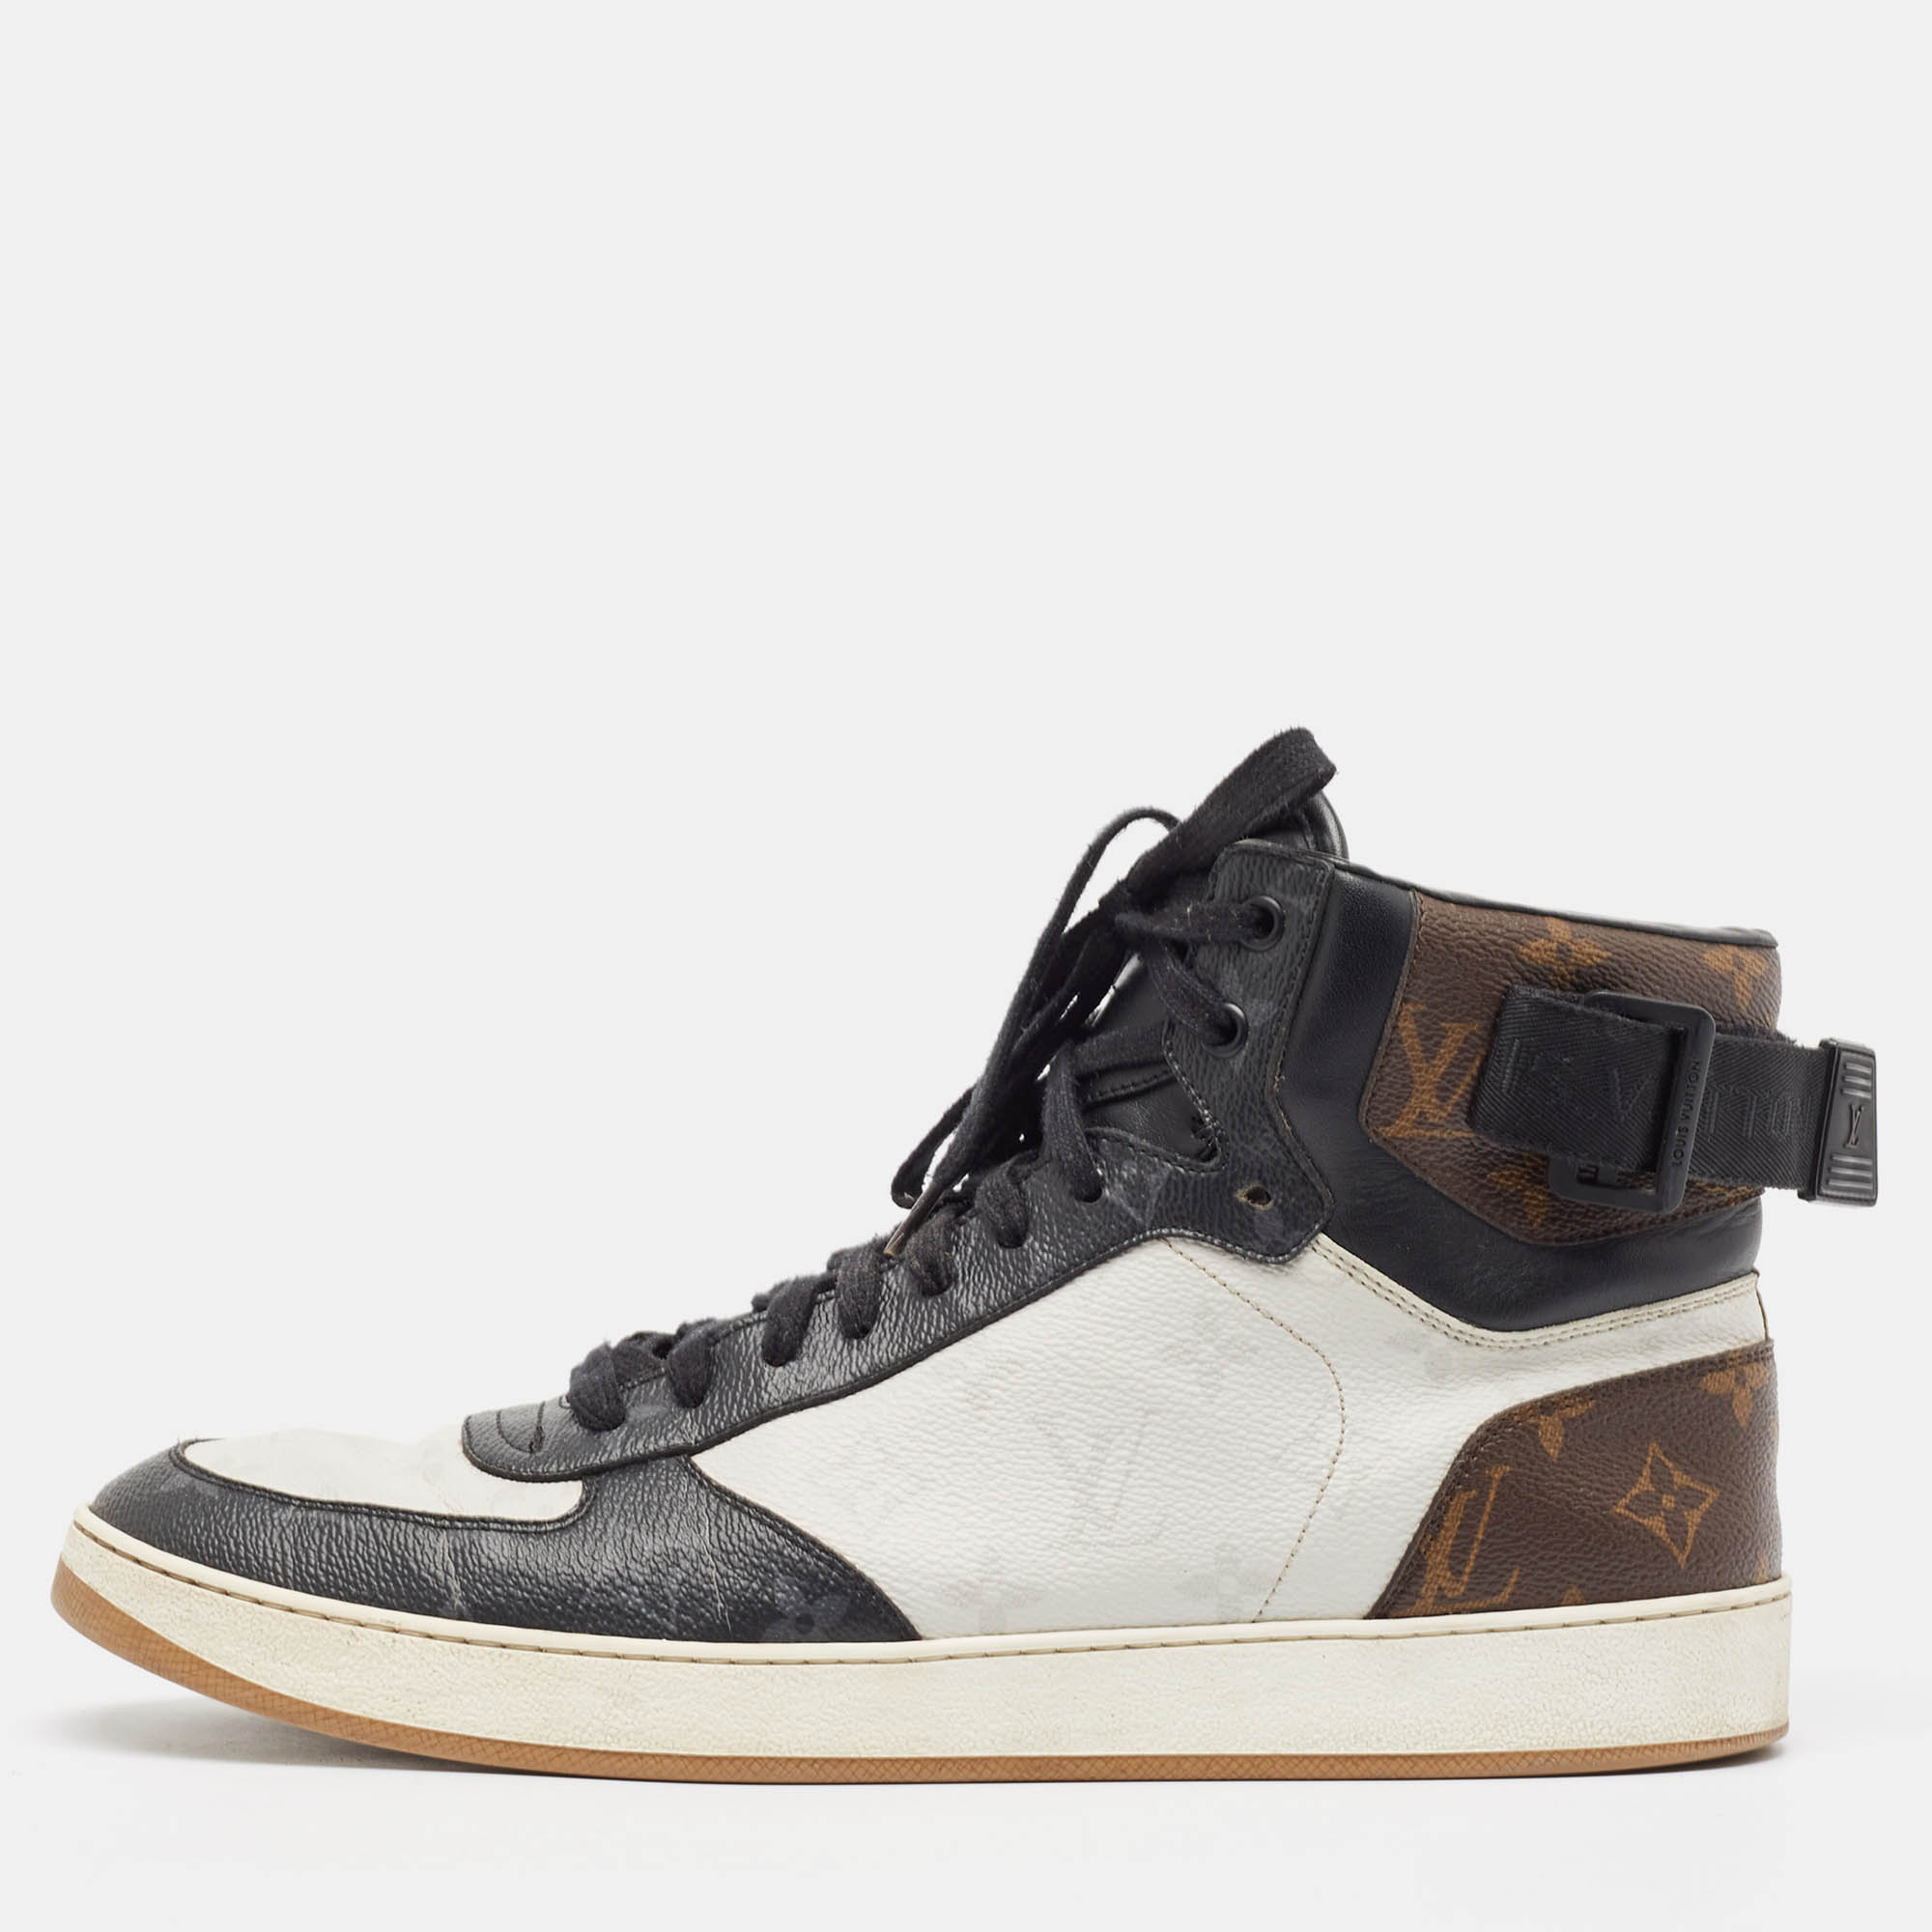 Louis vuitton tricolor monogram canvas and leather rivoli sneakers size 44